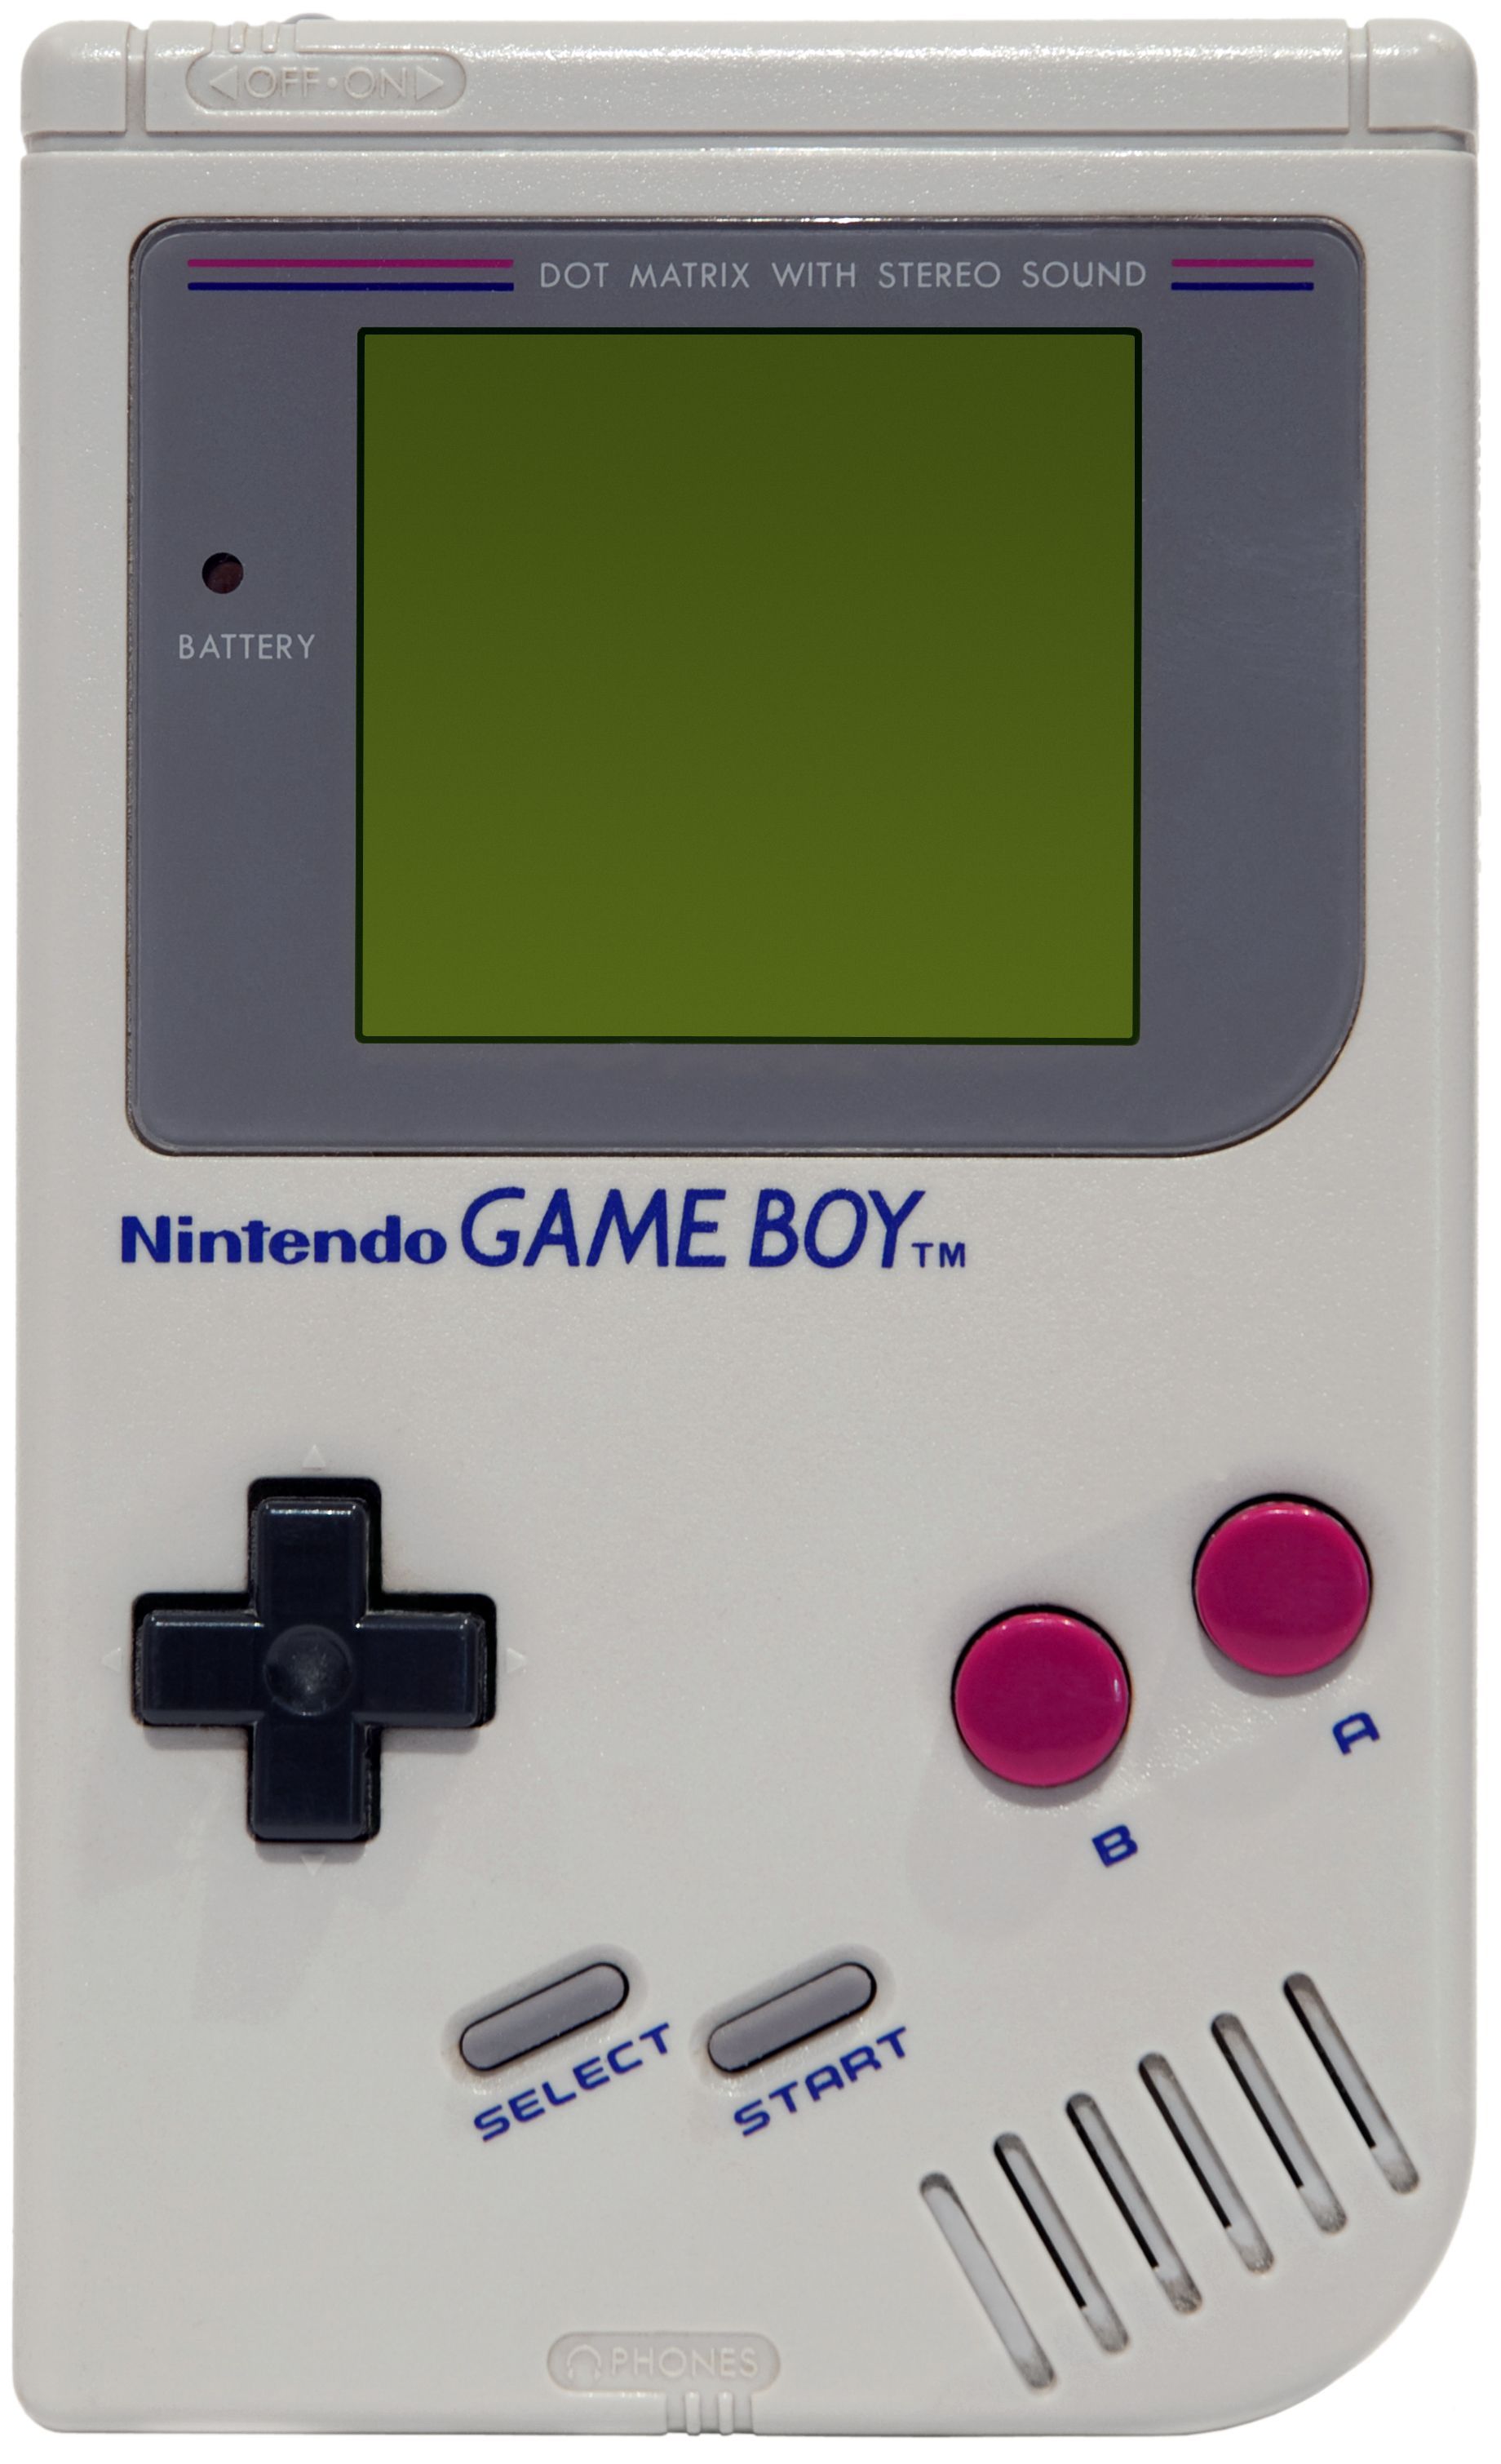 I just found my Game Boy la